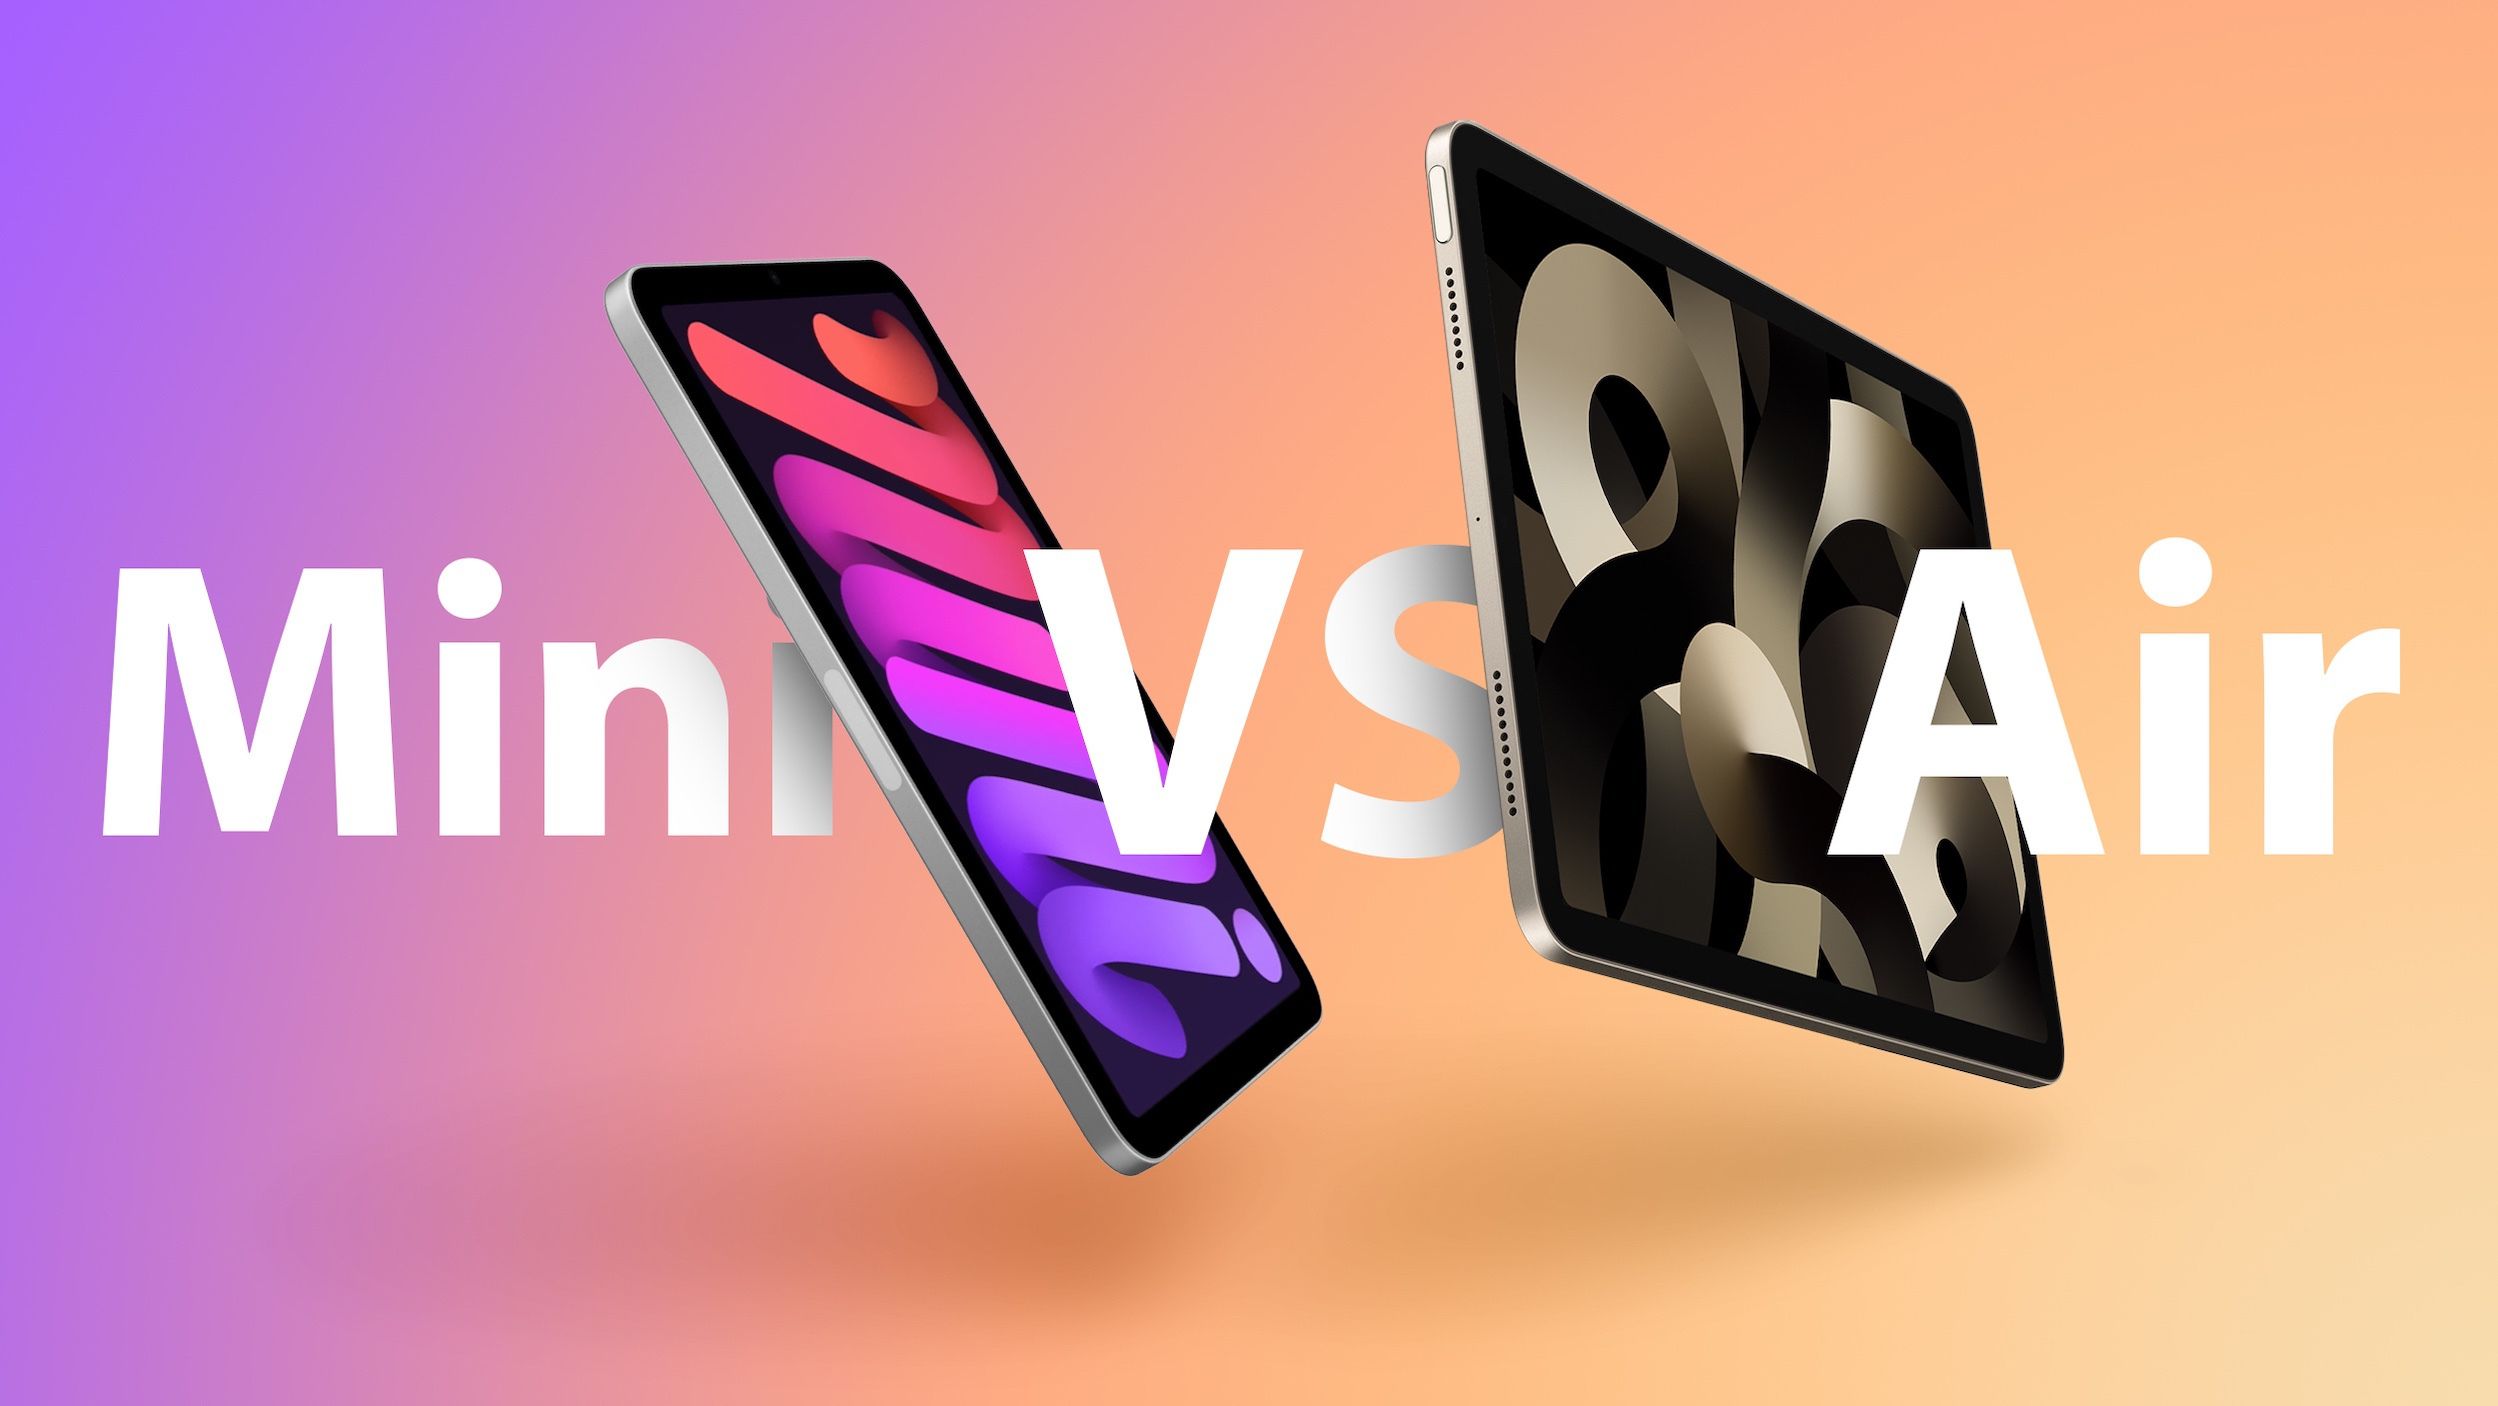 iPad 2017 vs iPad mini 4 comparison review